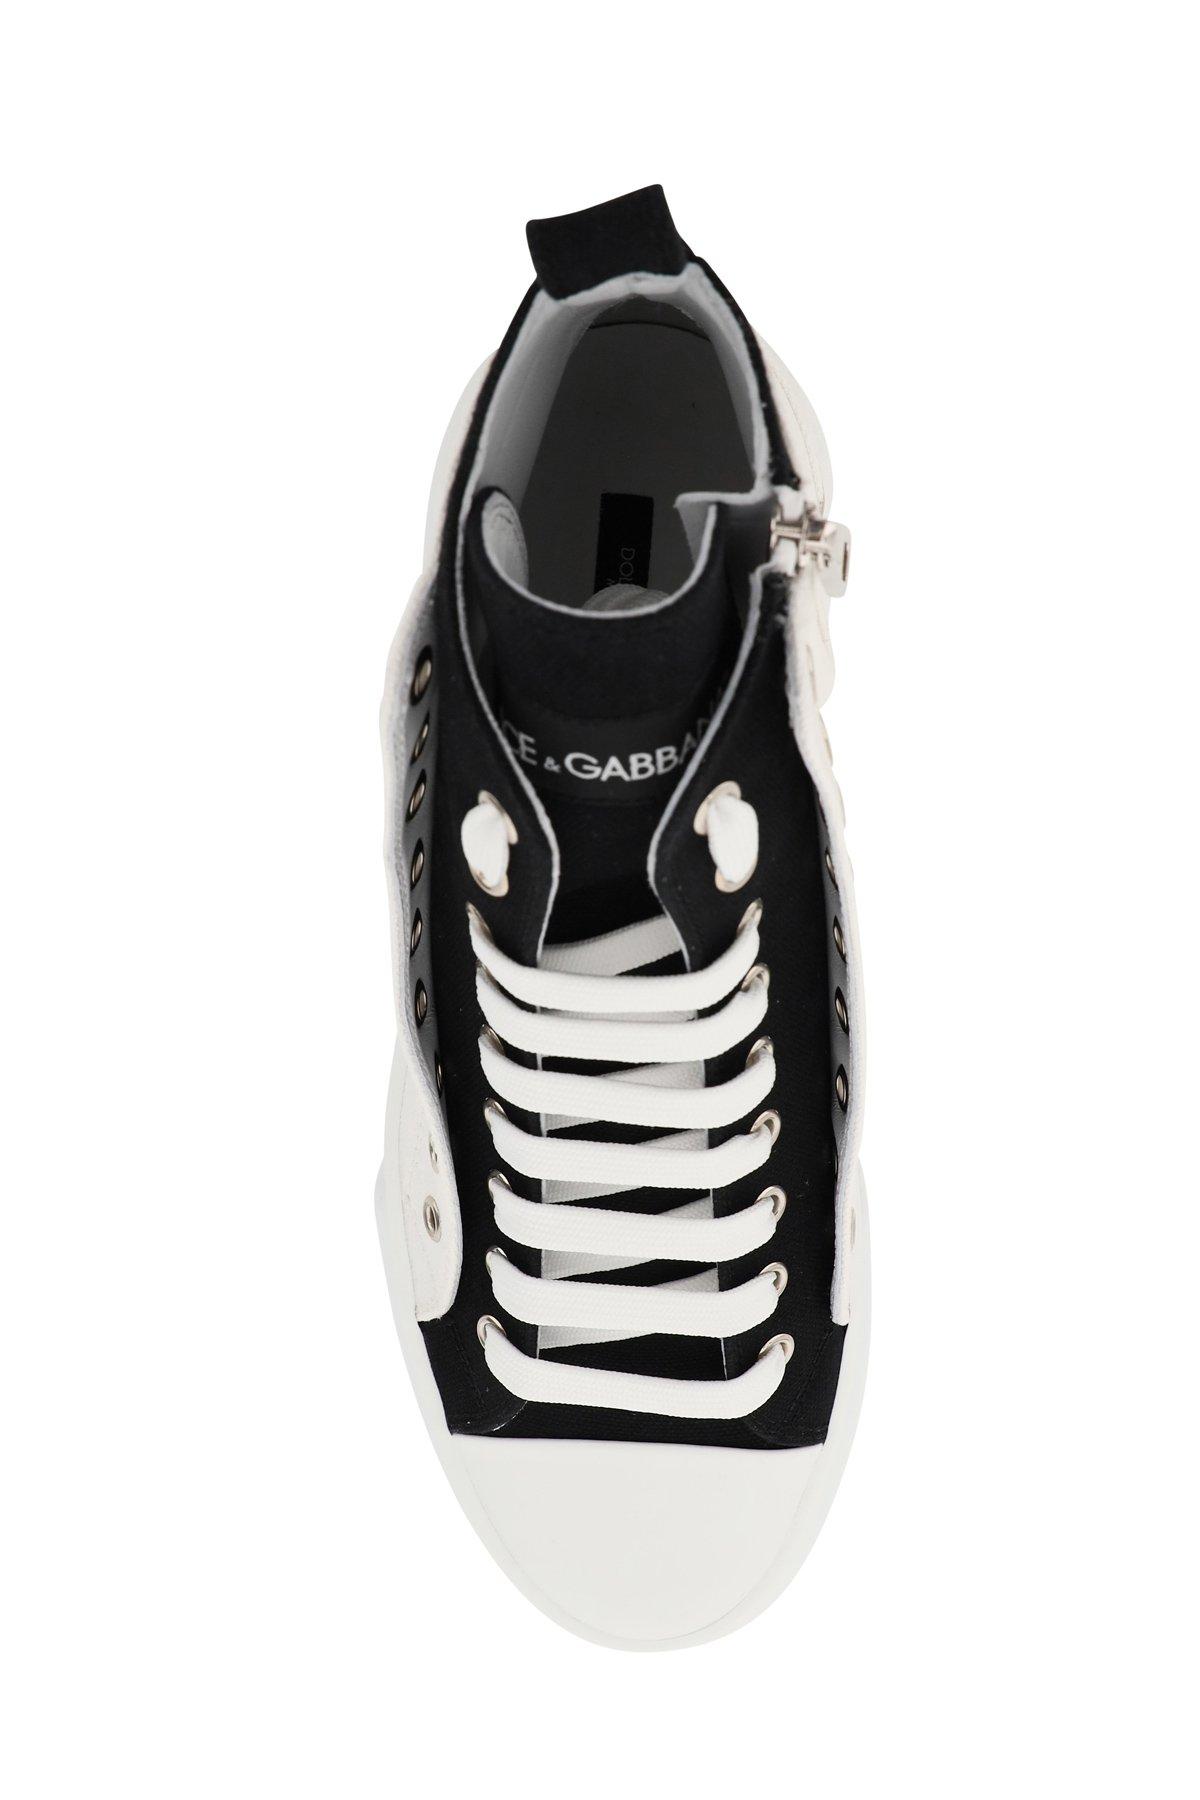 Dolce & Gabbana Canvas Portofino Light Hi-top Sneakers for Men - Lyst